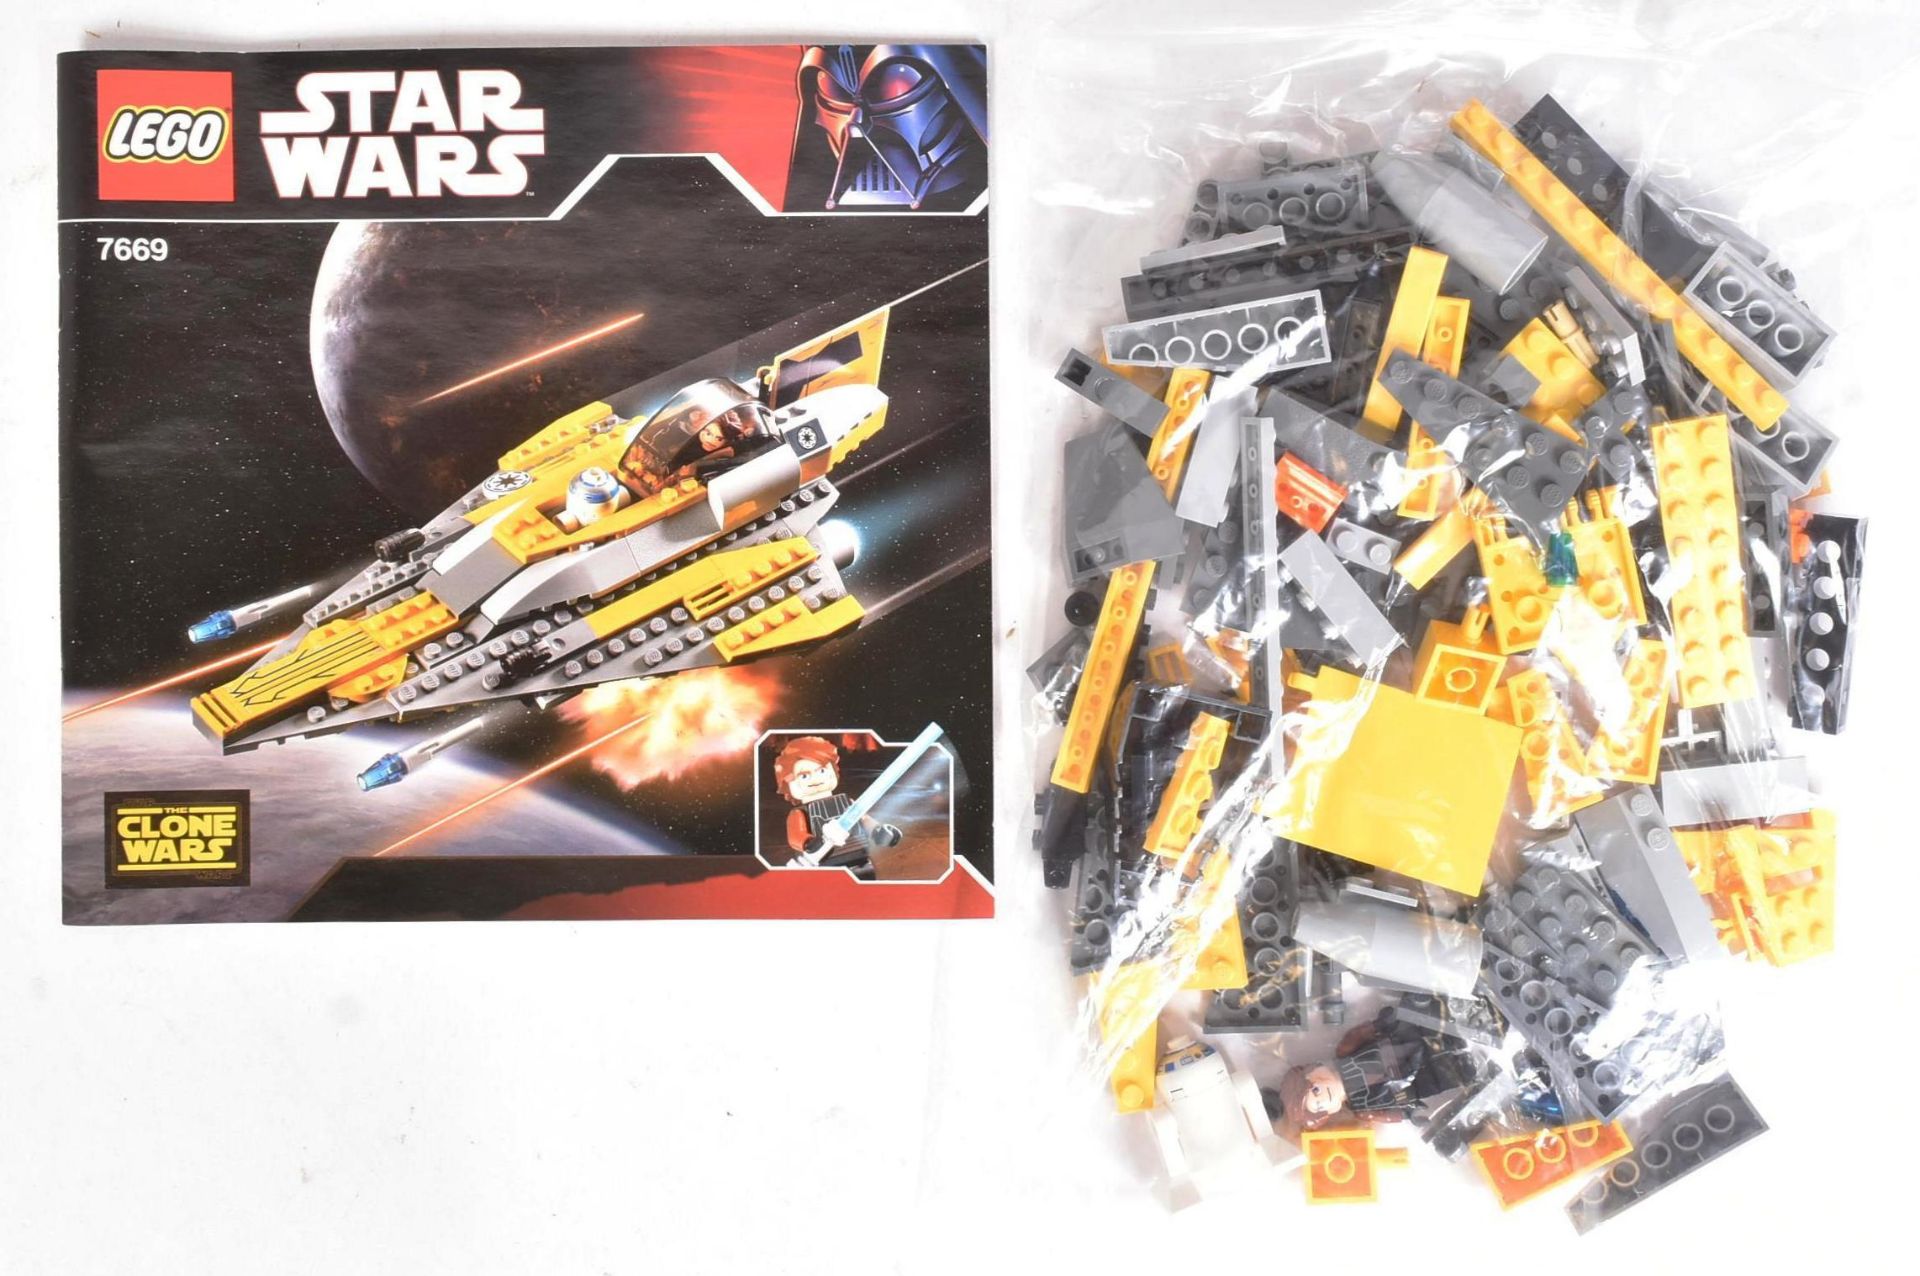 LEGO - STAR WARS - 7669 - ANAKIN'S JEDI STARFIGHTER - Image 3 of 5